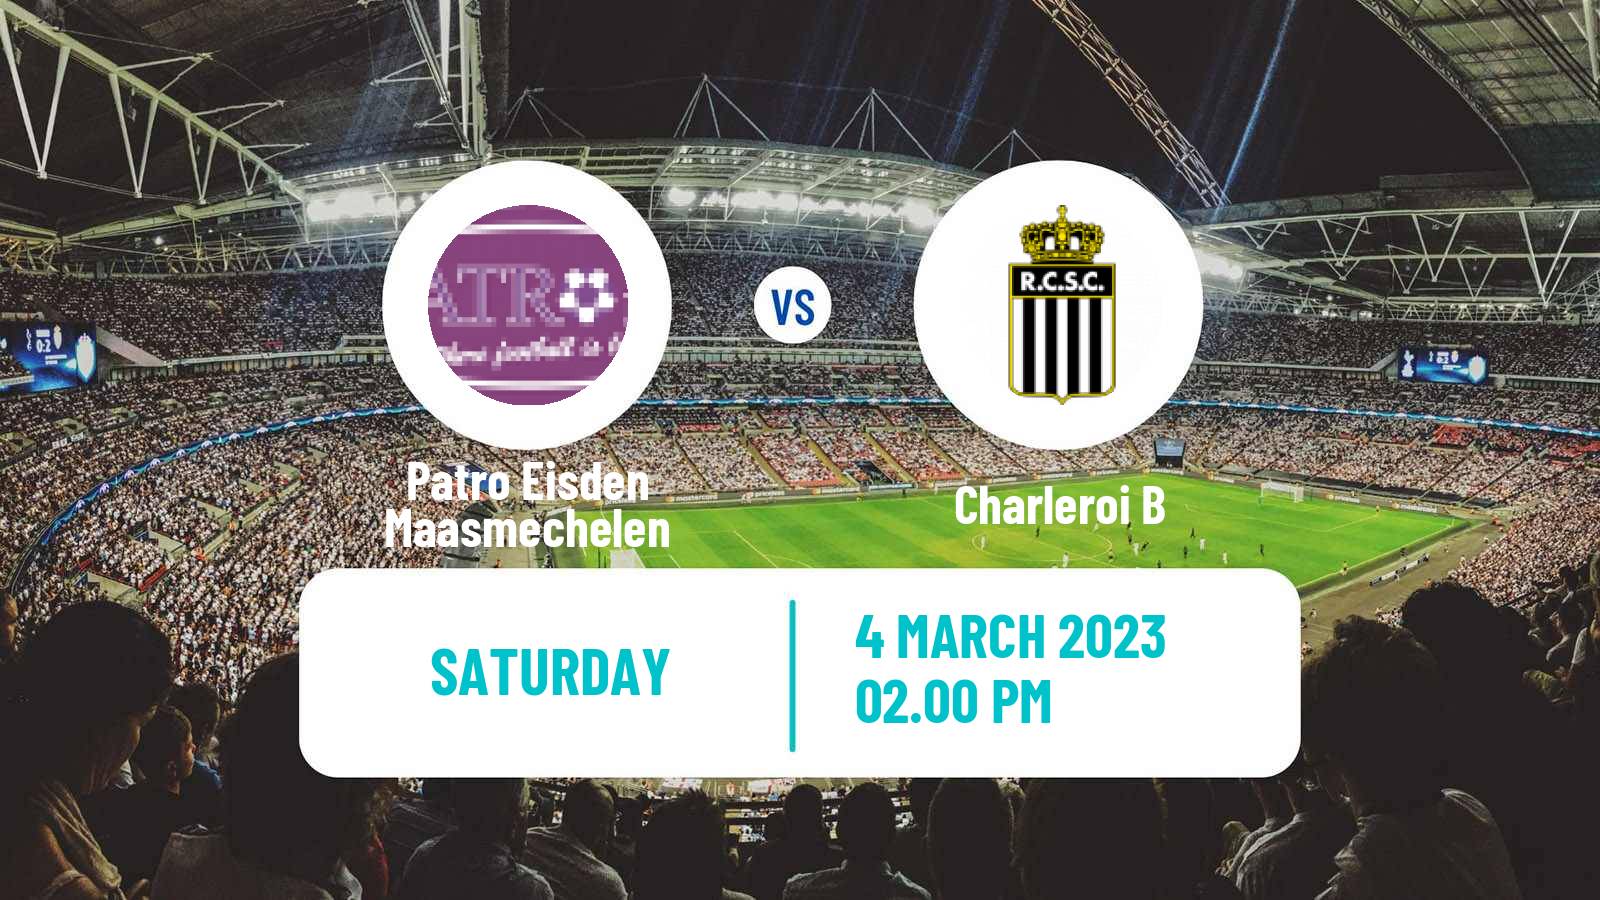 Soccer Belgian National Division 1 Patro Eisden Maasmechelen - Charleroi B